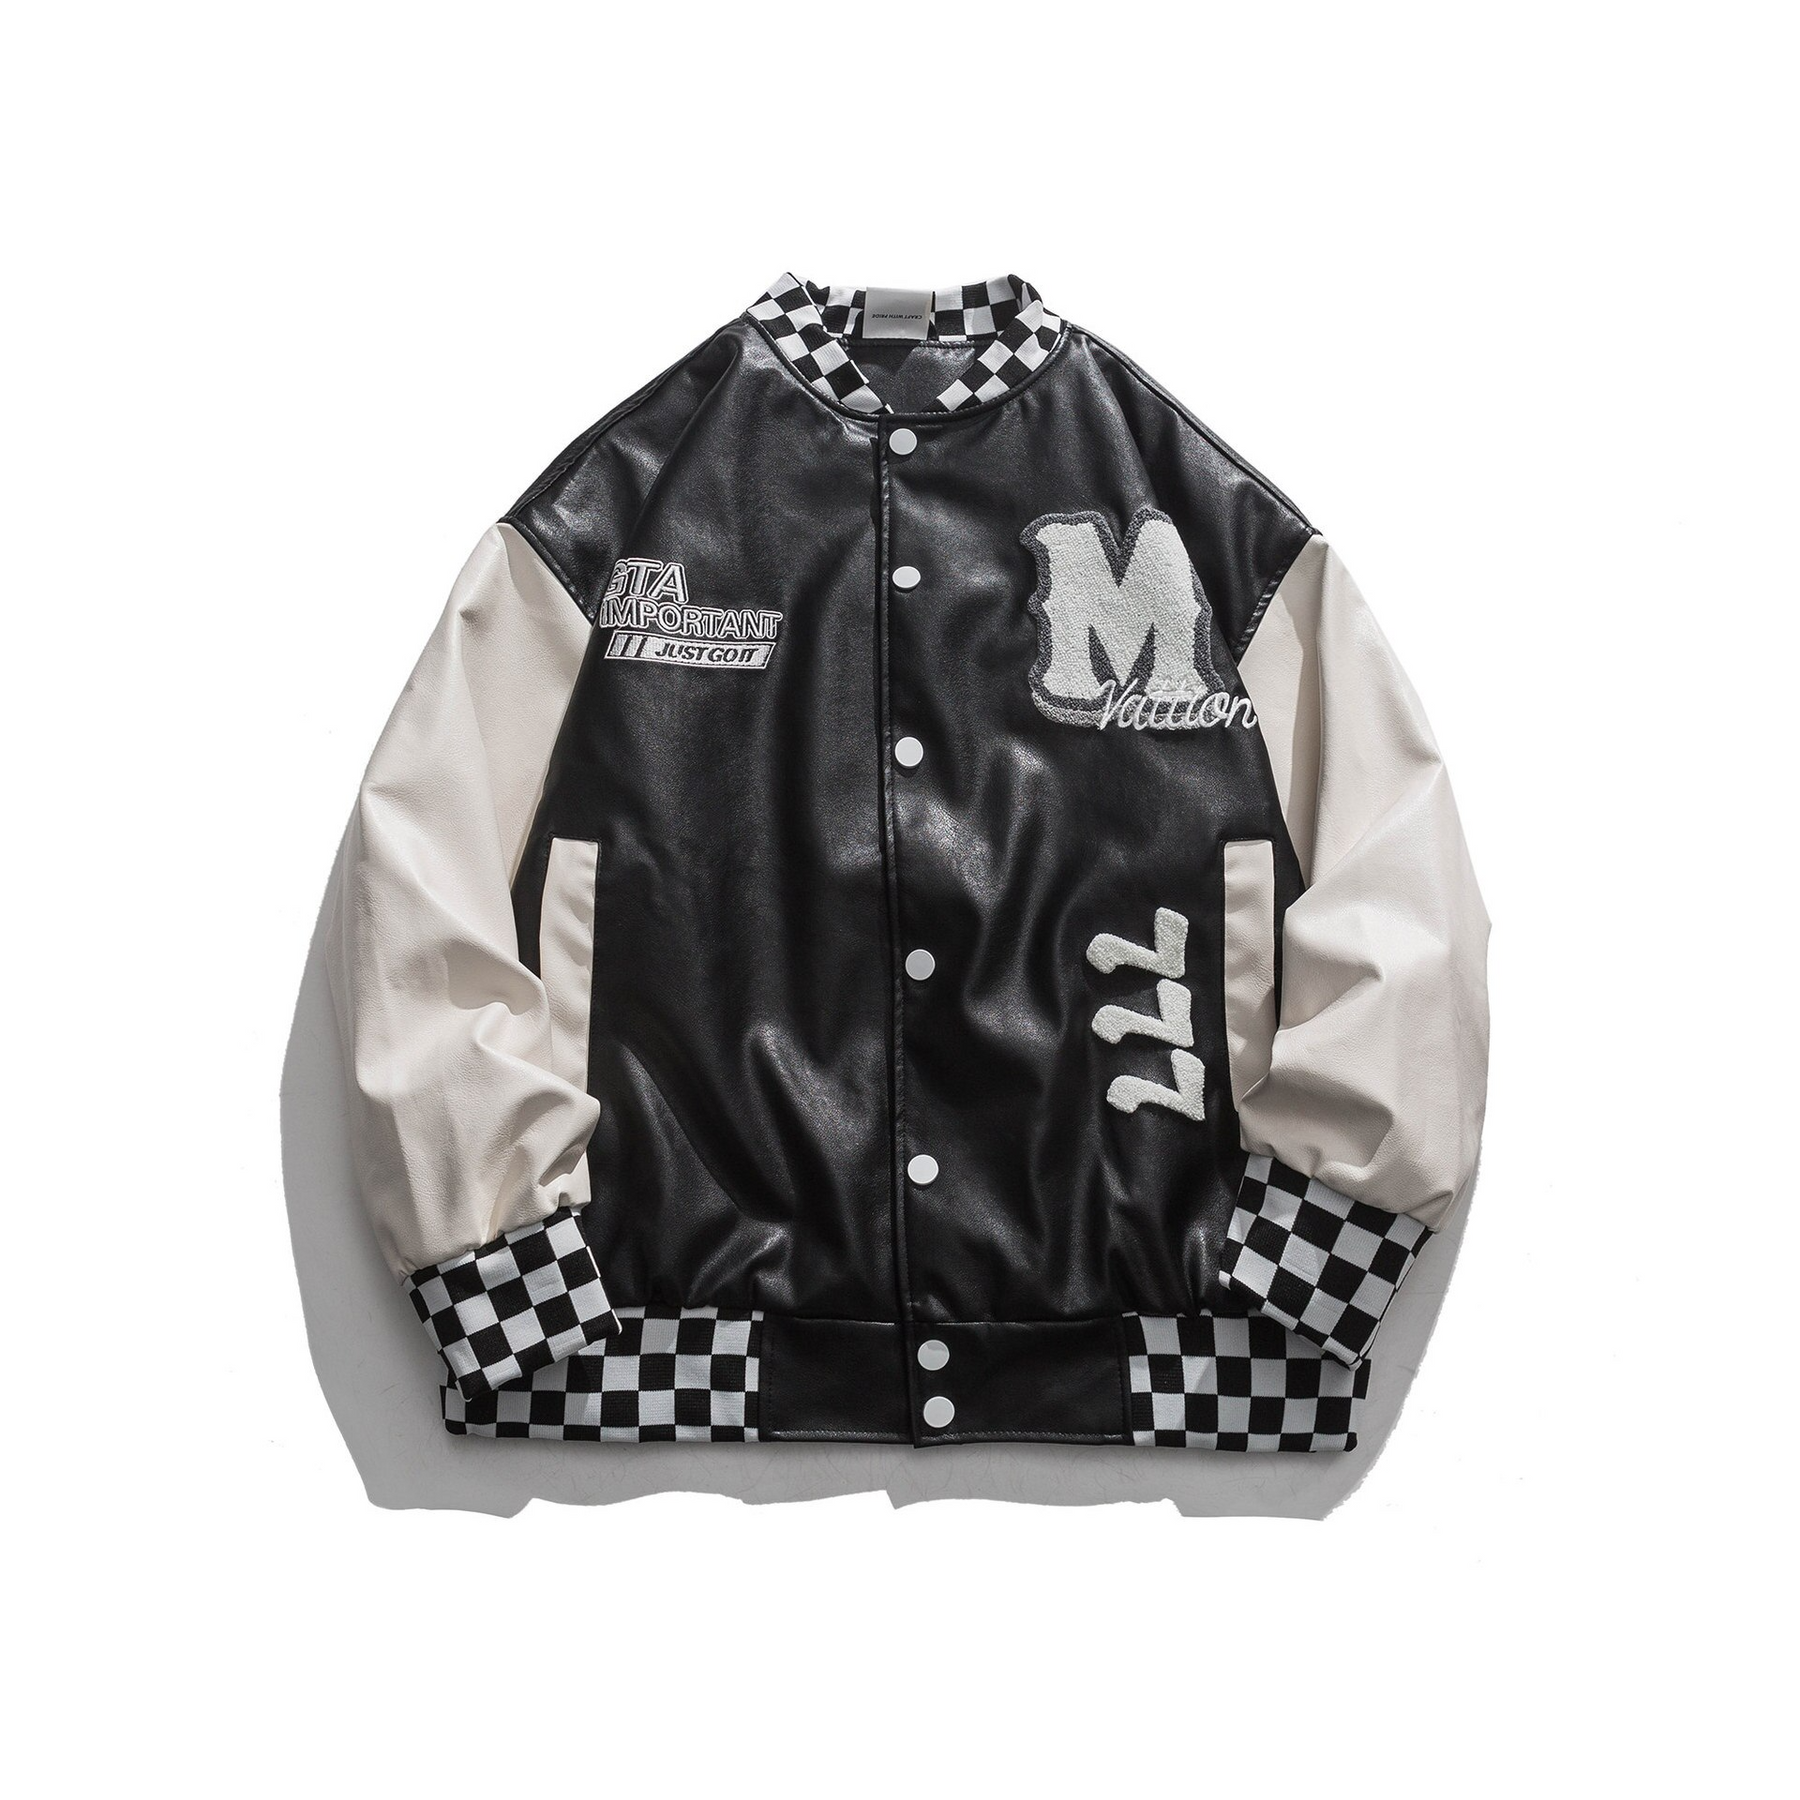 Majesda® - STRATEGY ZOOMEST CULB Leather Jacket outfit ideas, streetwear fashion - majesda.com